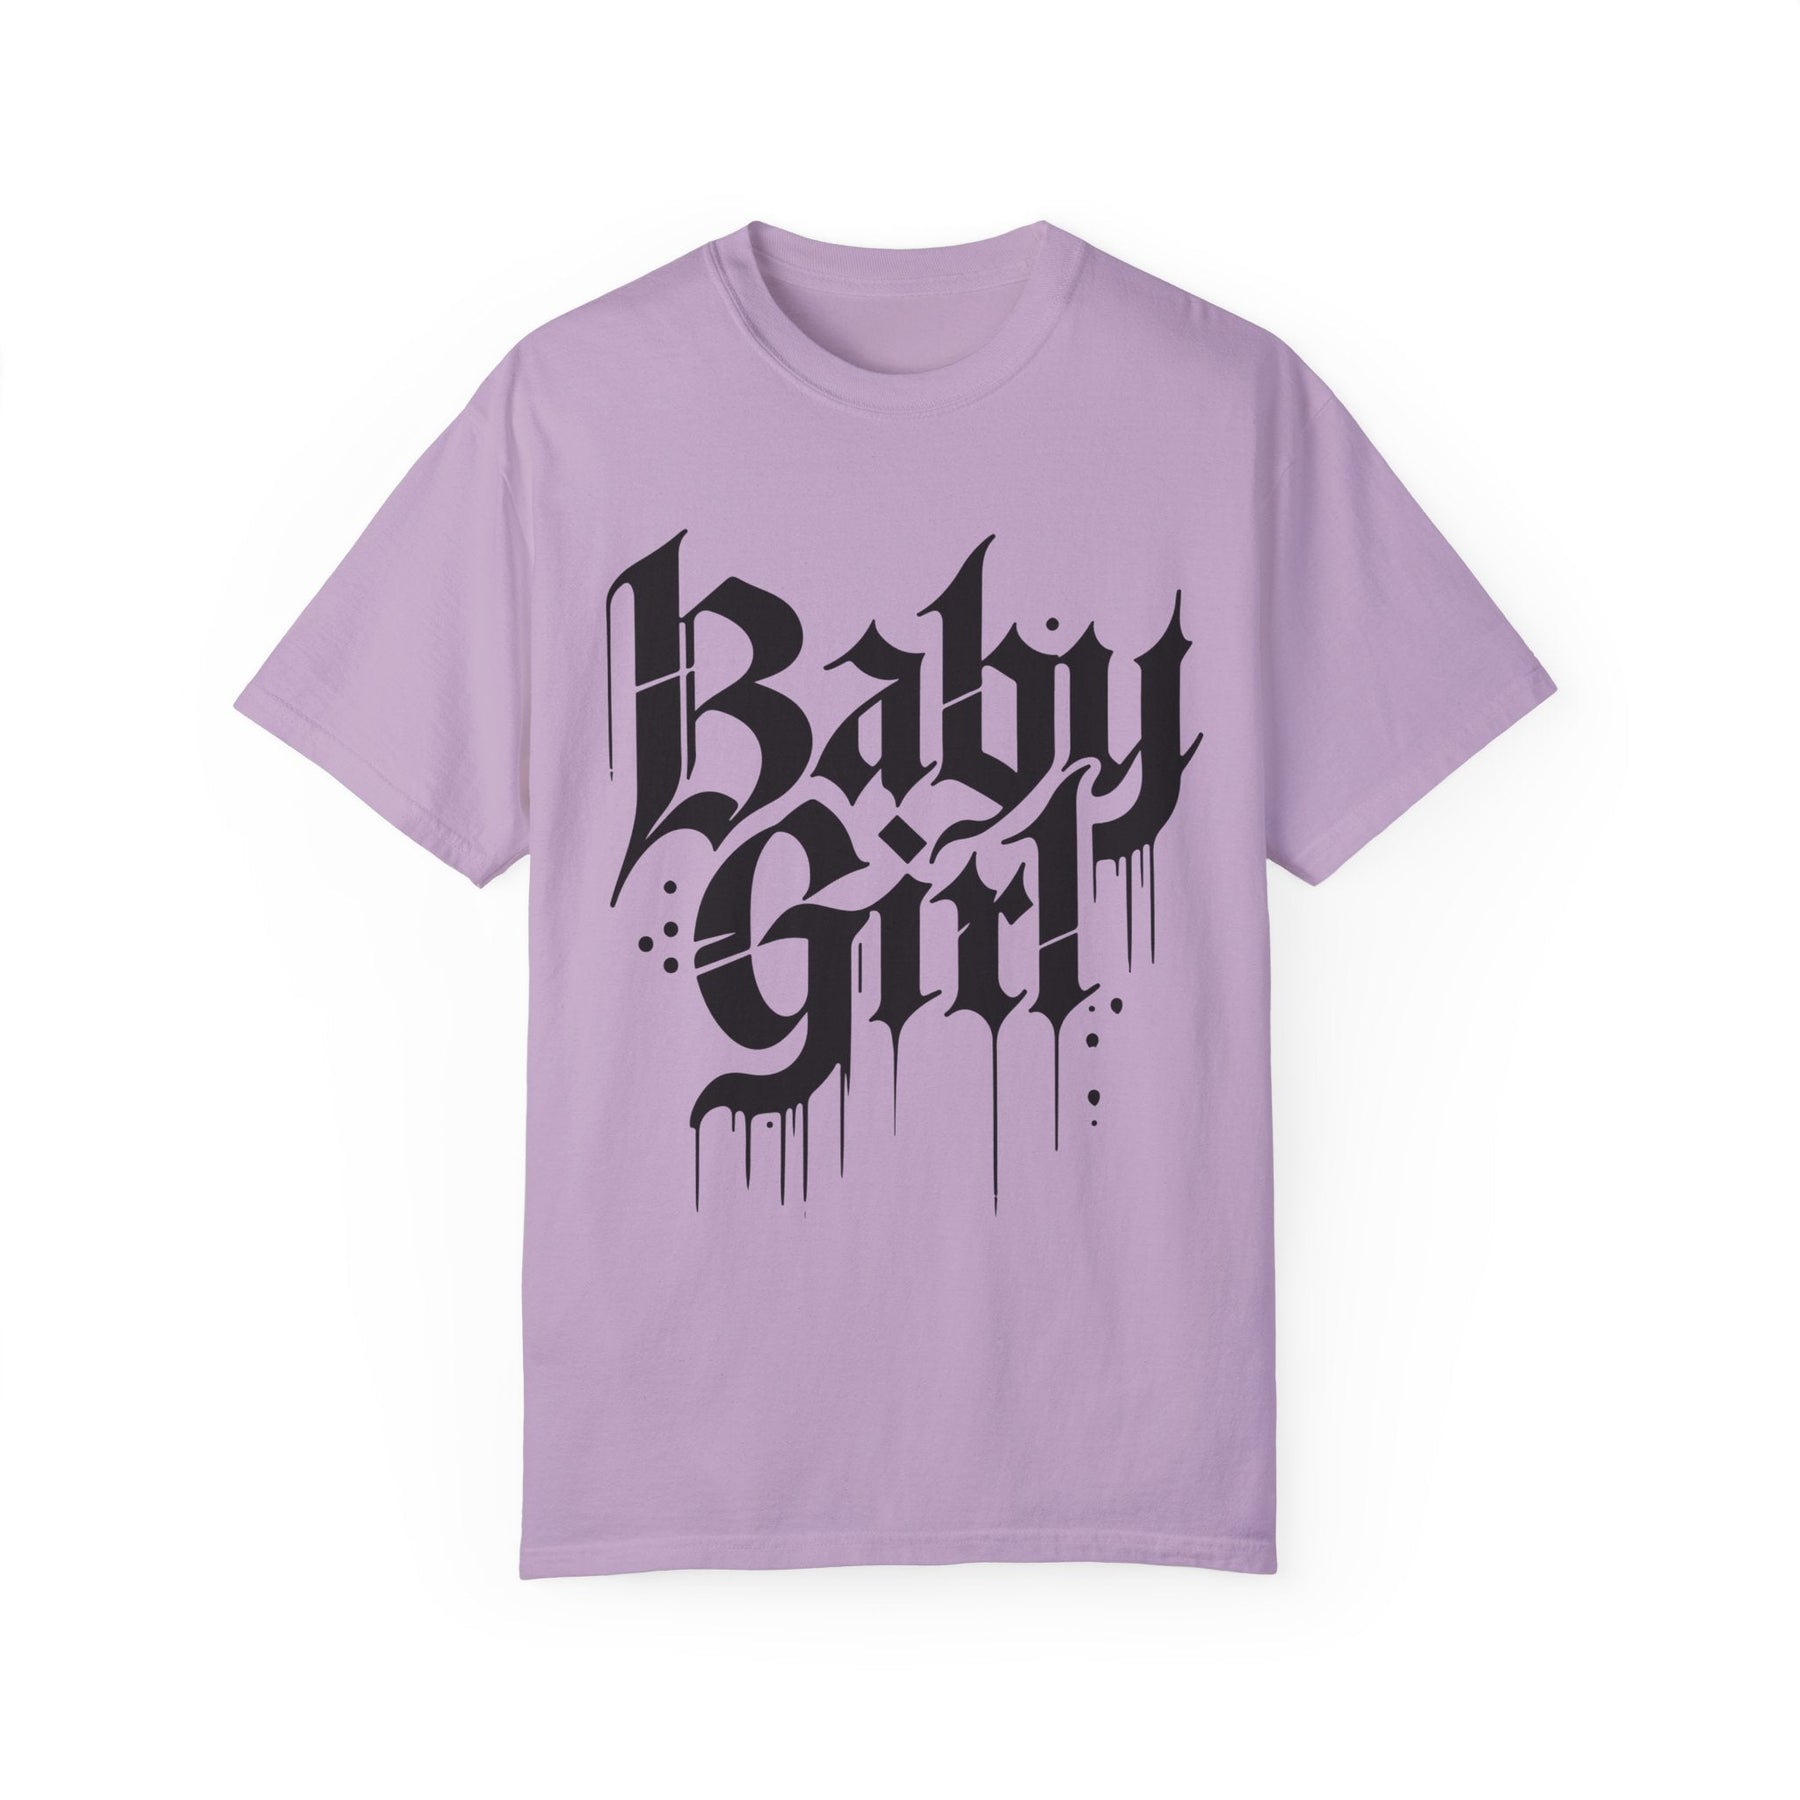 Baby Girl Comfort Tee - Goth Cloth Co.T - Shirt32307785201540158182